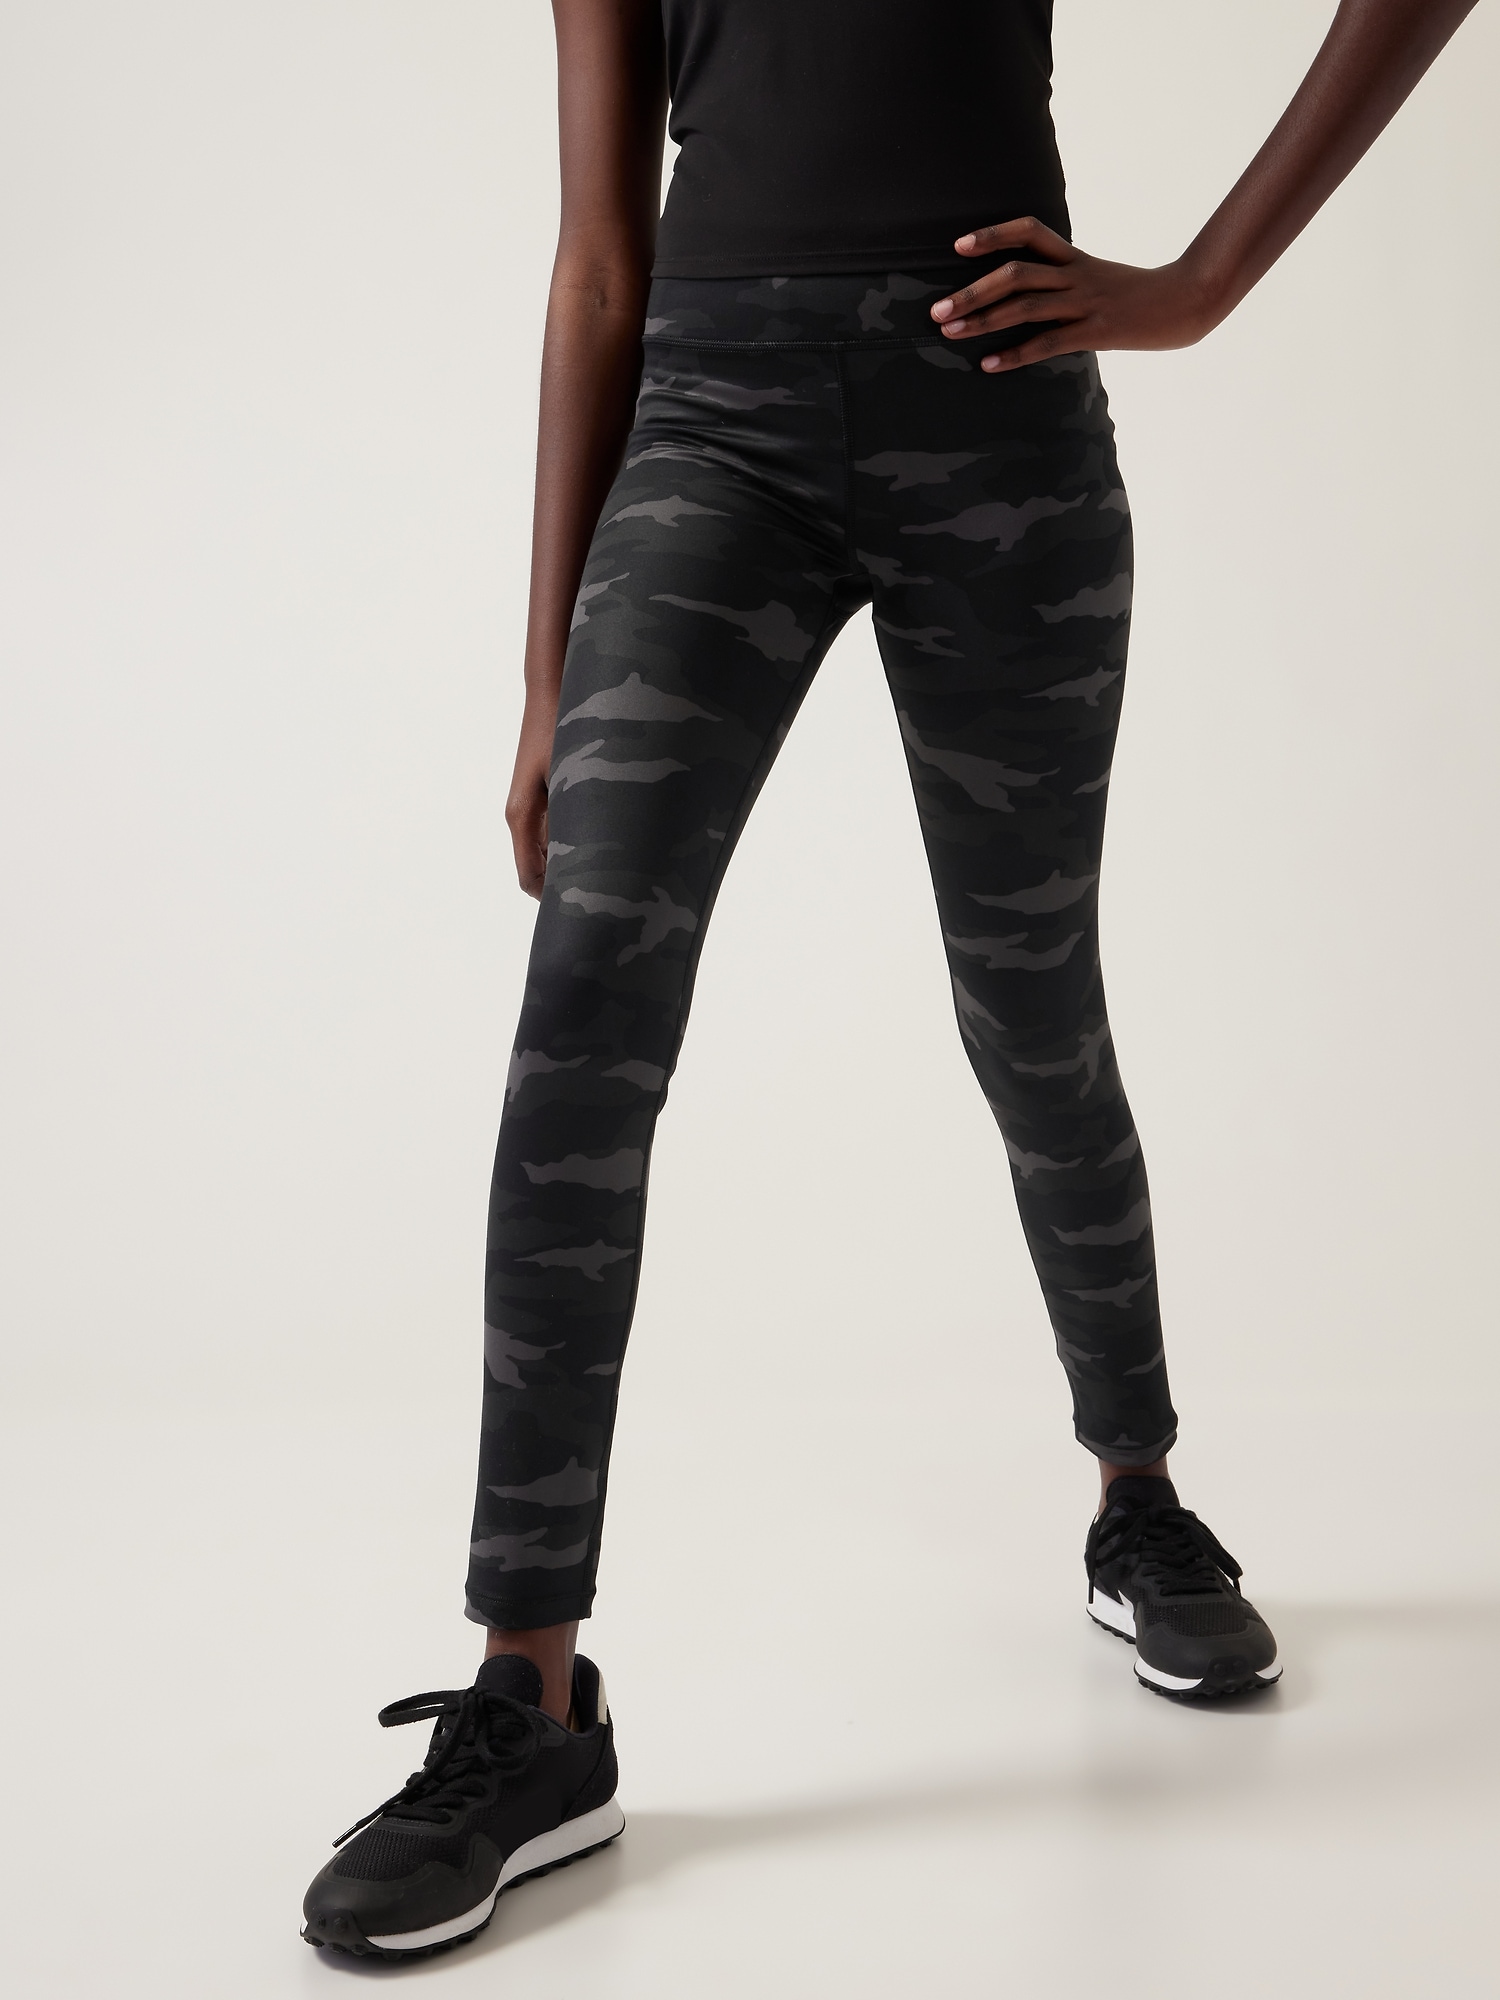 Athleta Shorts Women's Extra Small Black Activewear Stretch Tights